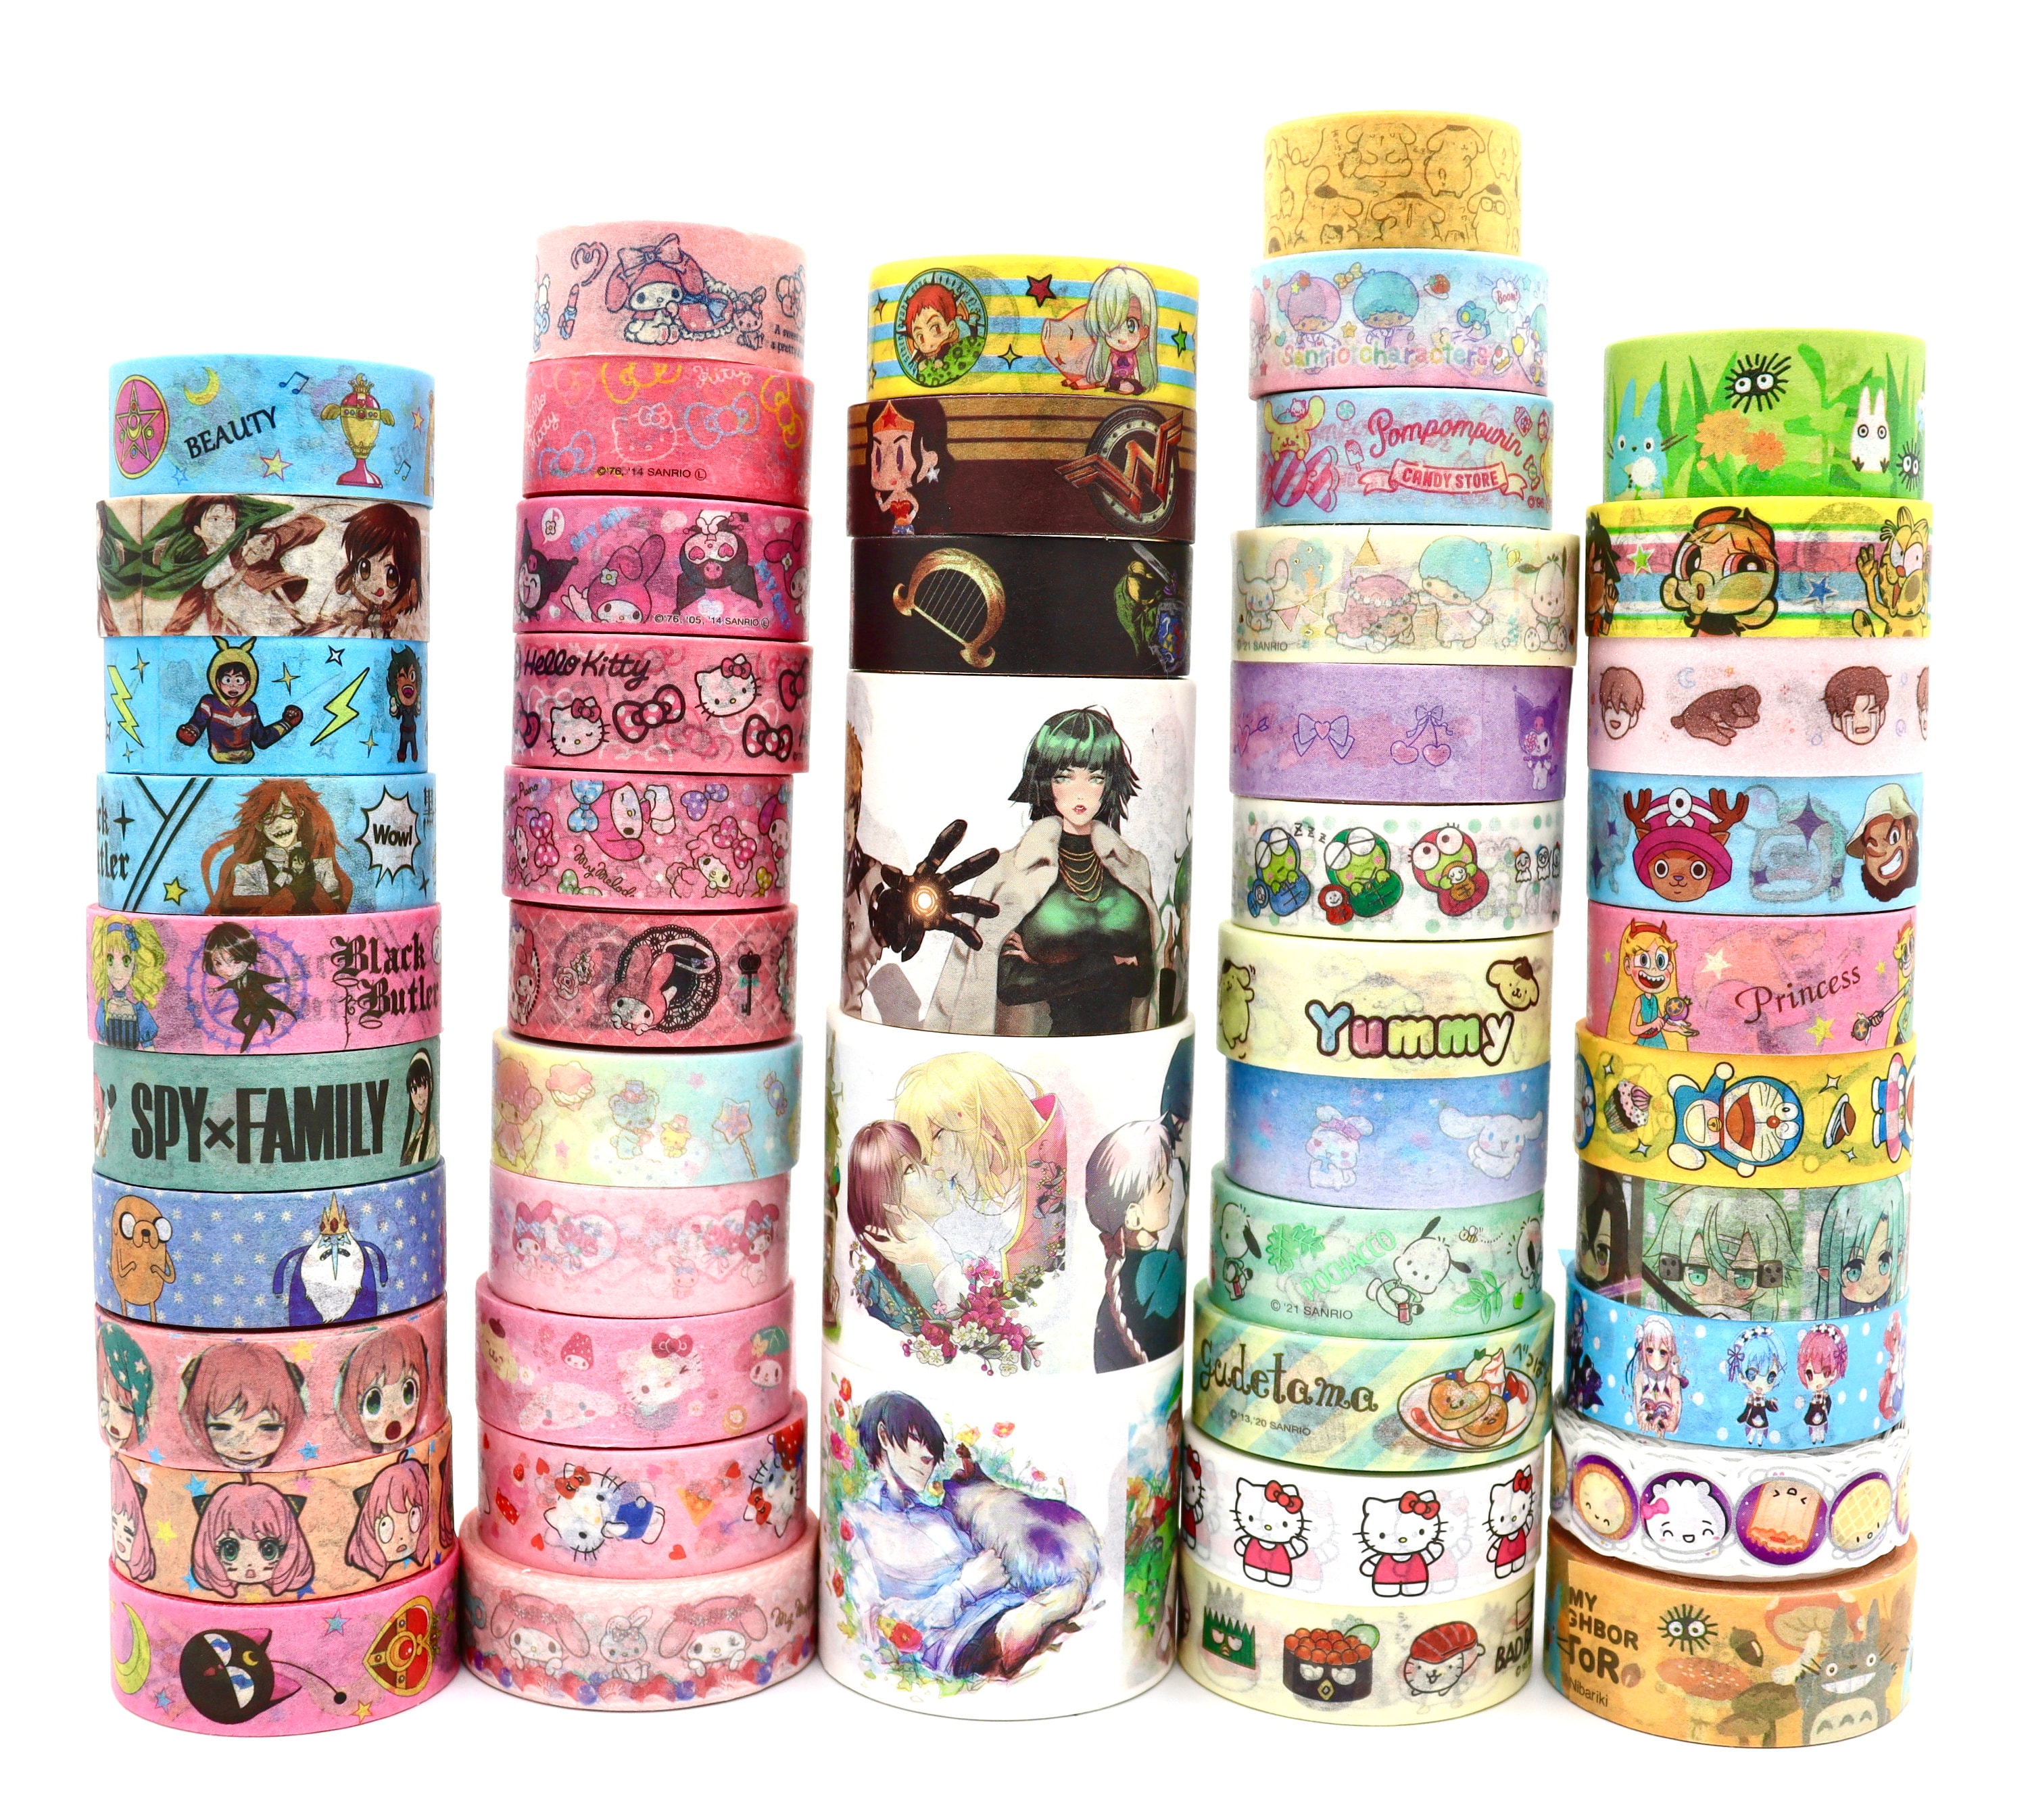 Bright PINK Washi Tape Japanese 15mmx7m Organization, Journaling, Mixed  Media, Collage, Mt Tape Hot Pink Tape Prettytape Pink Masking Tape 